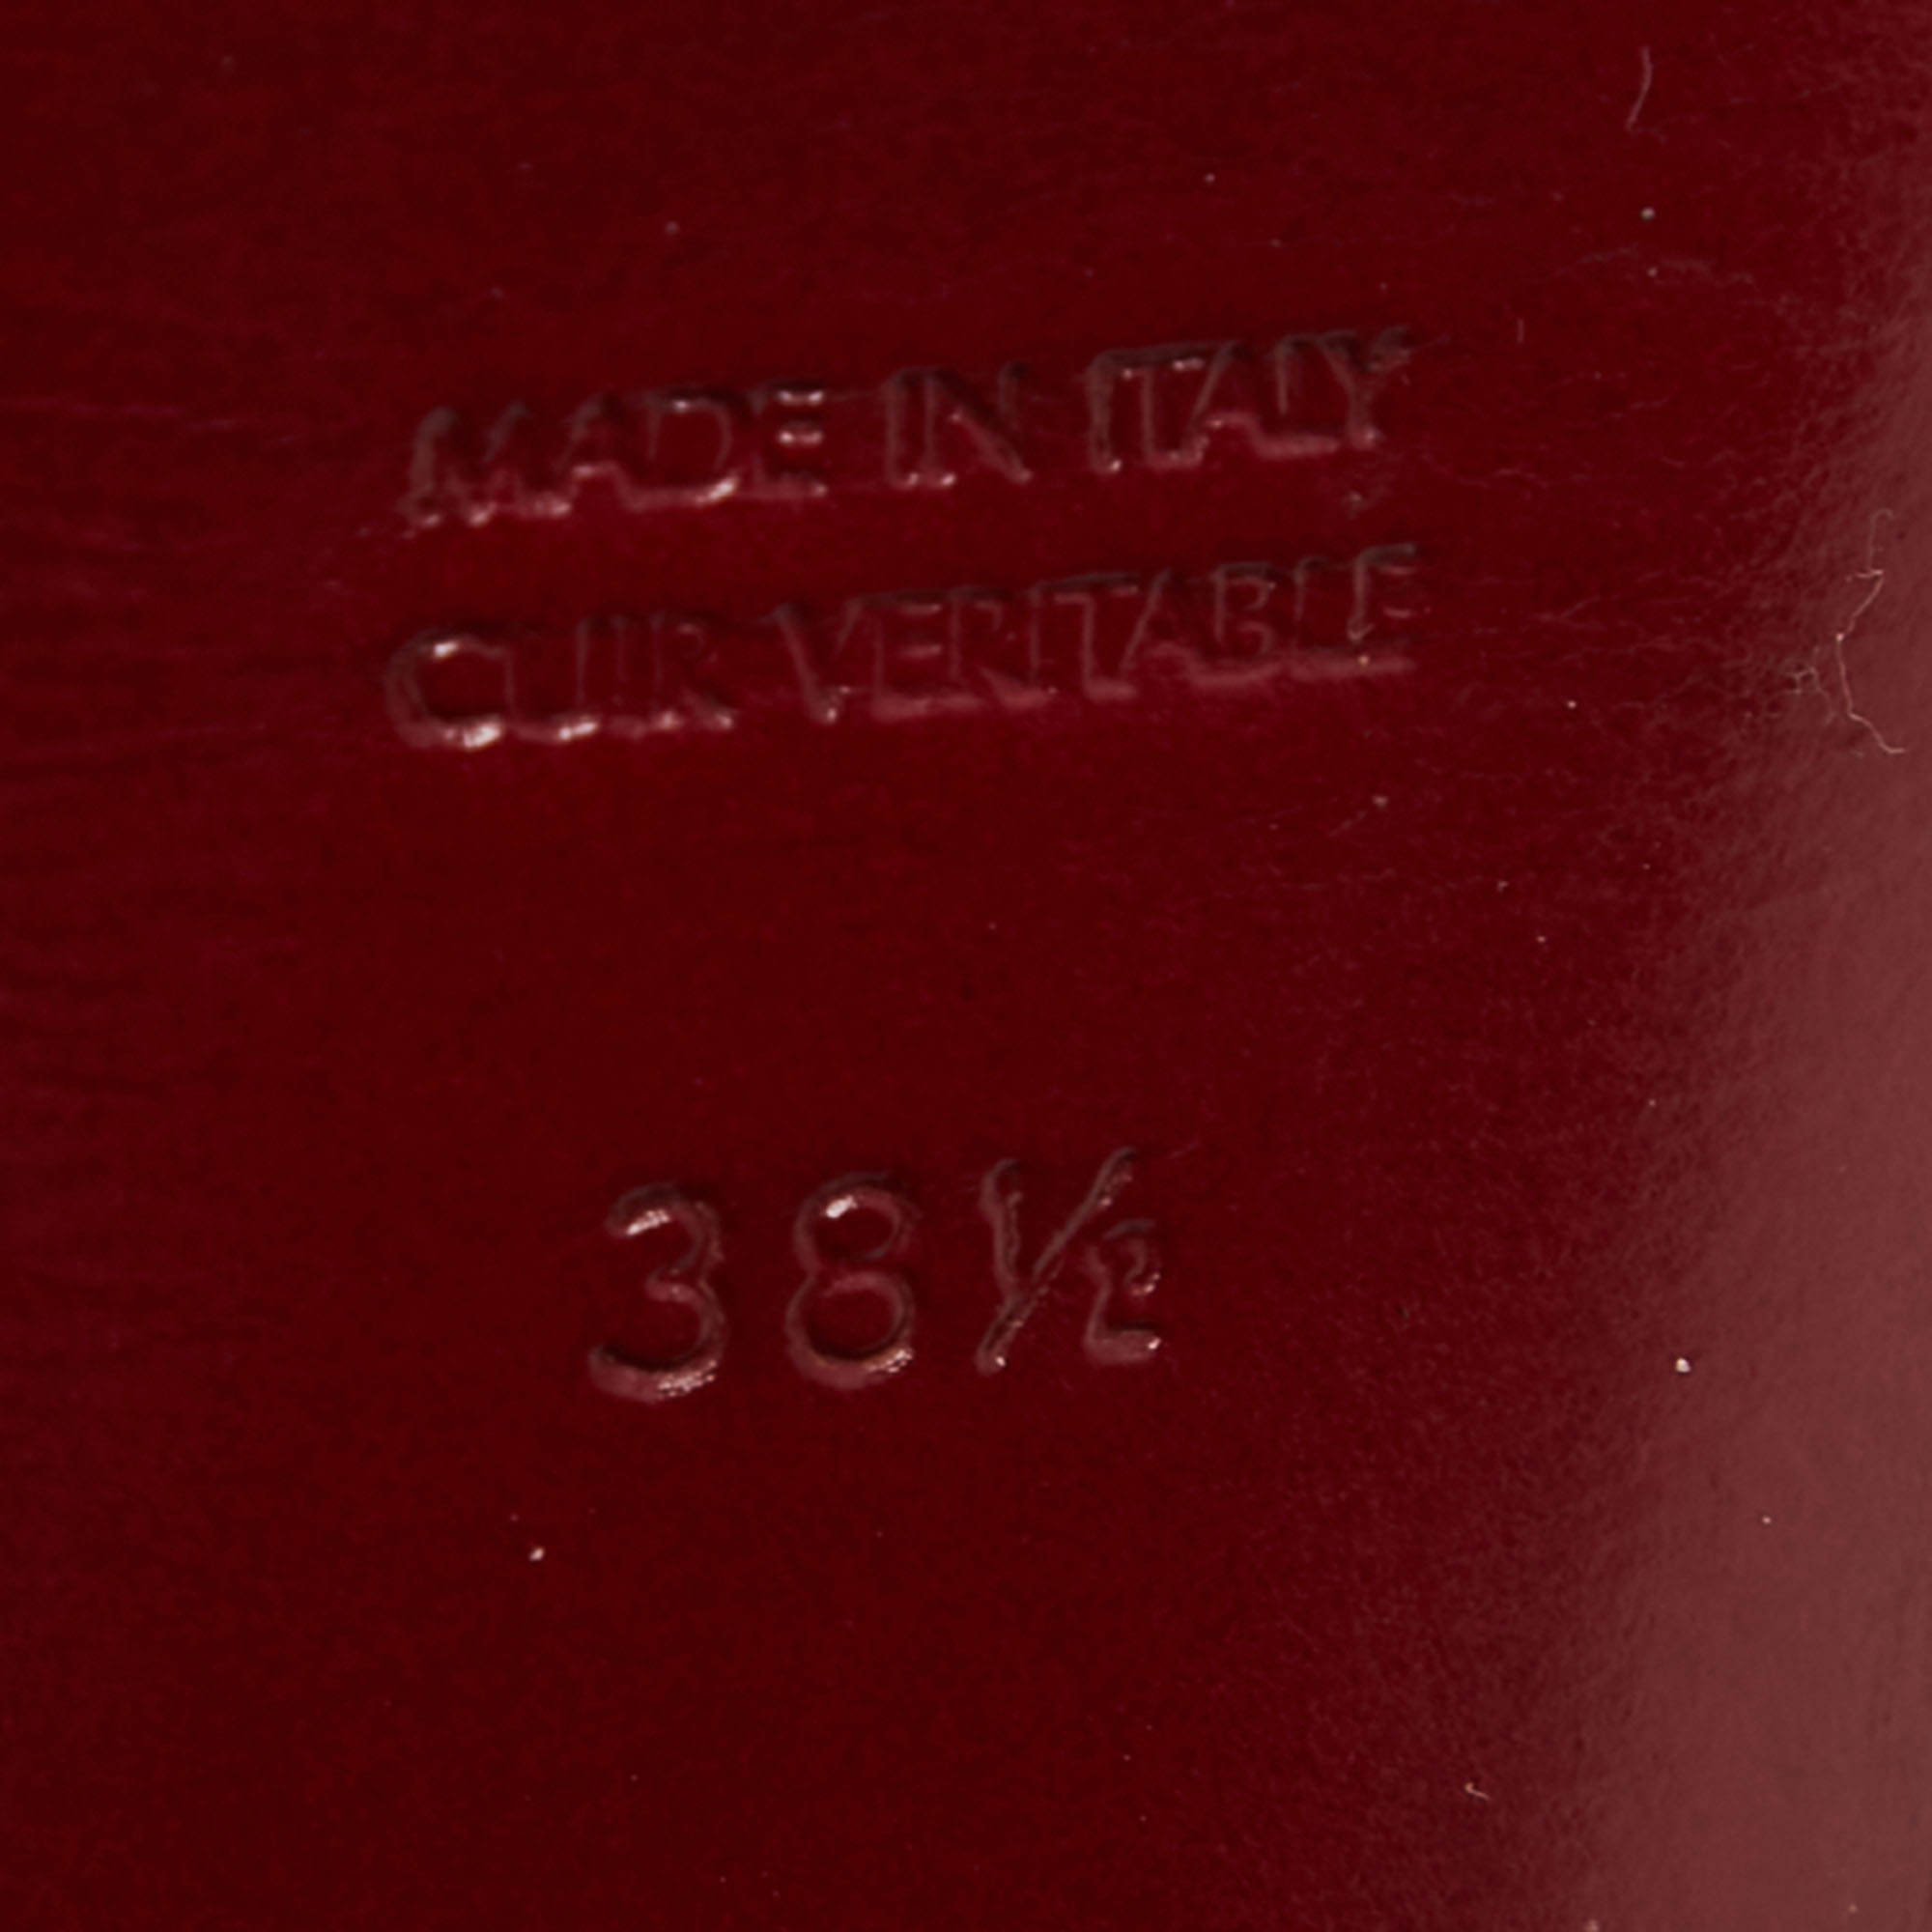 Yves Saint Laurent Burgundy Patent Leather Tribute Sandals Size 38.5